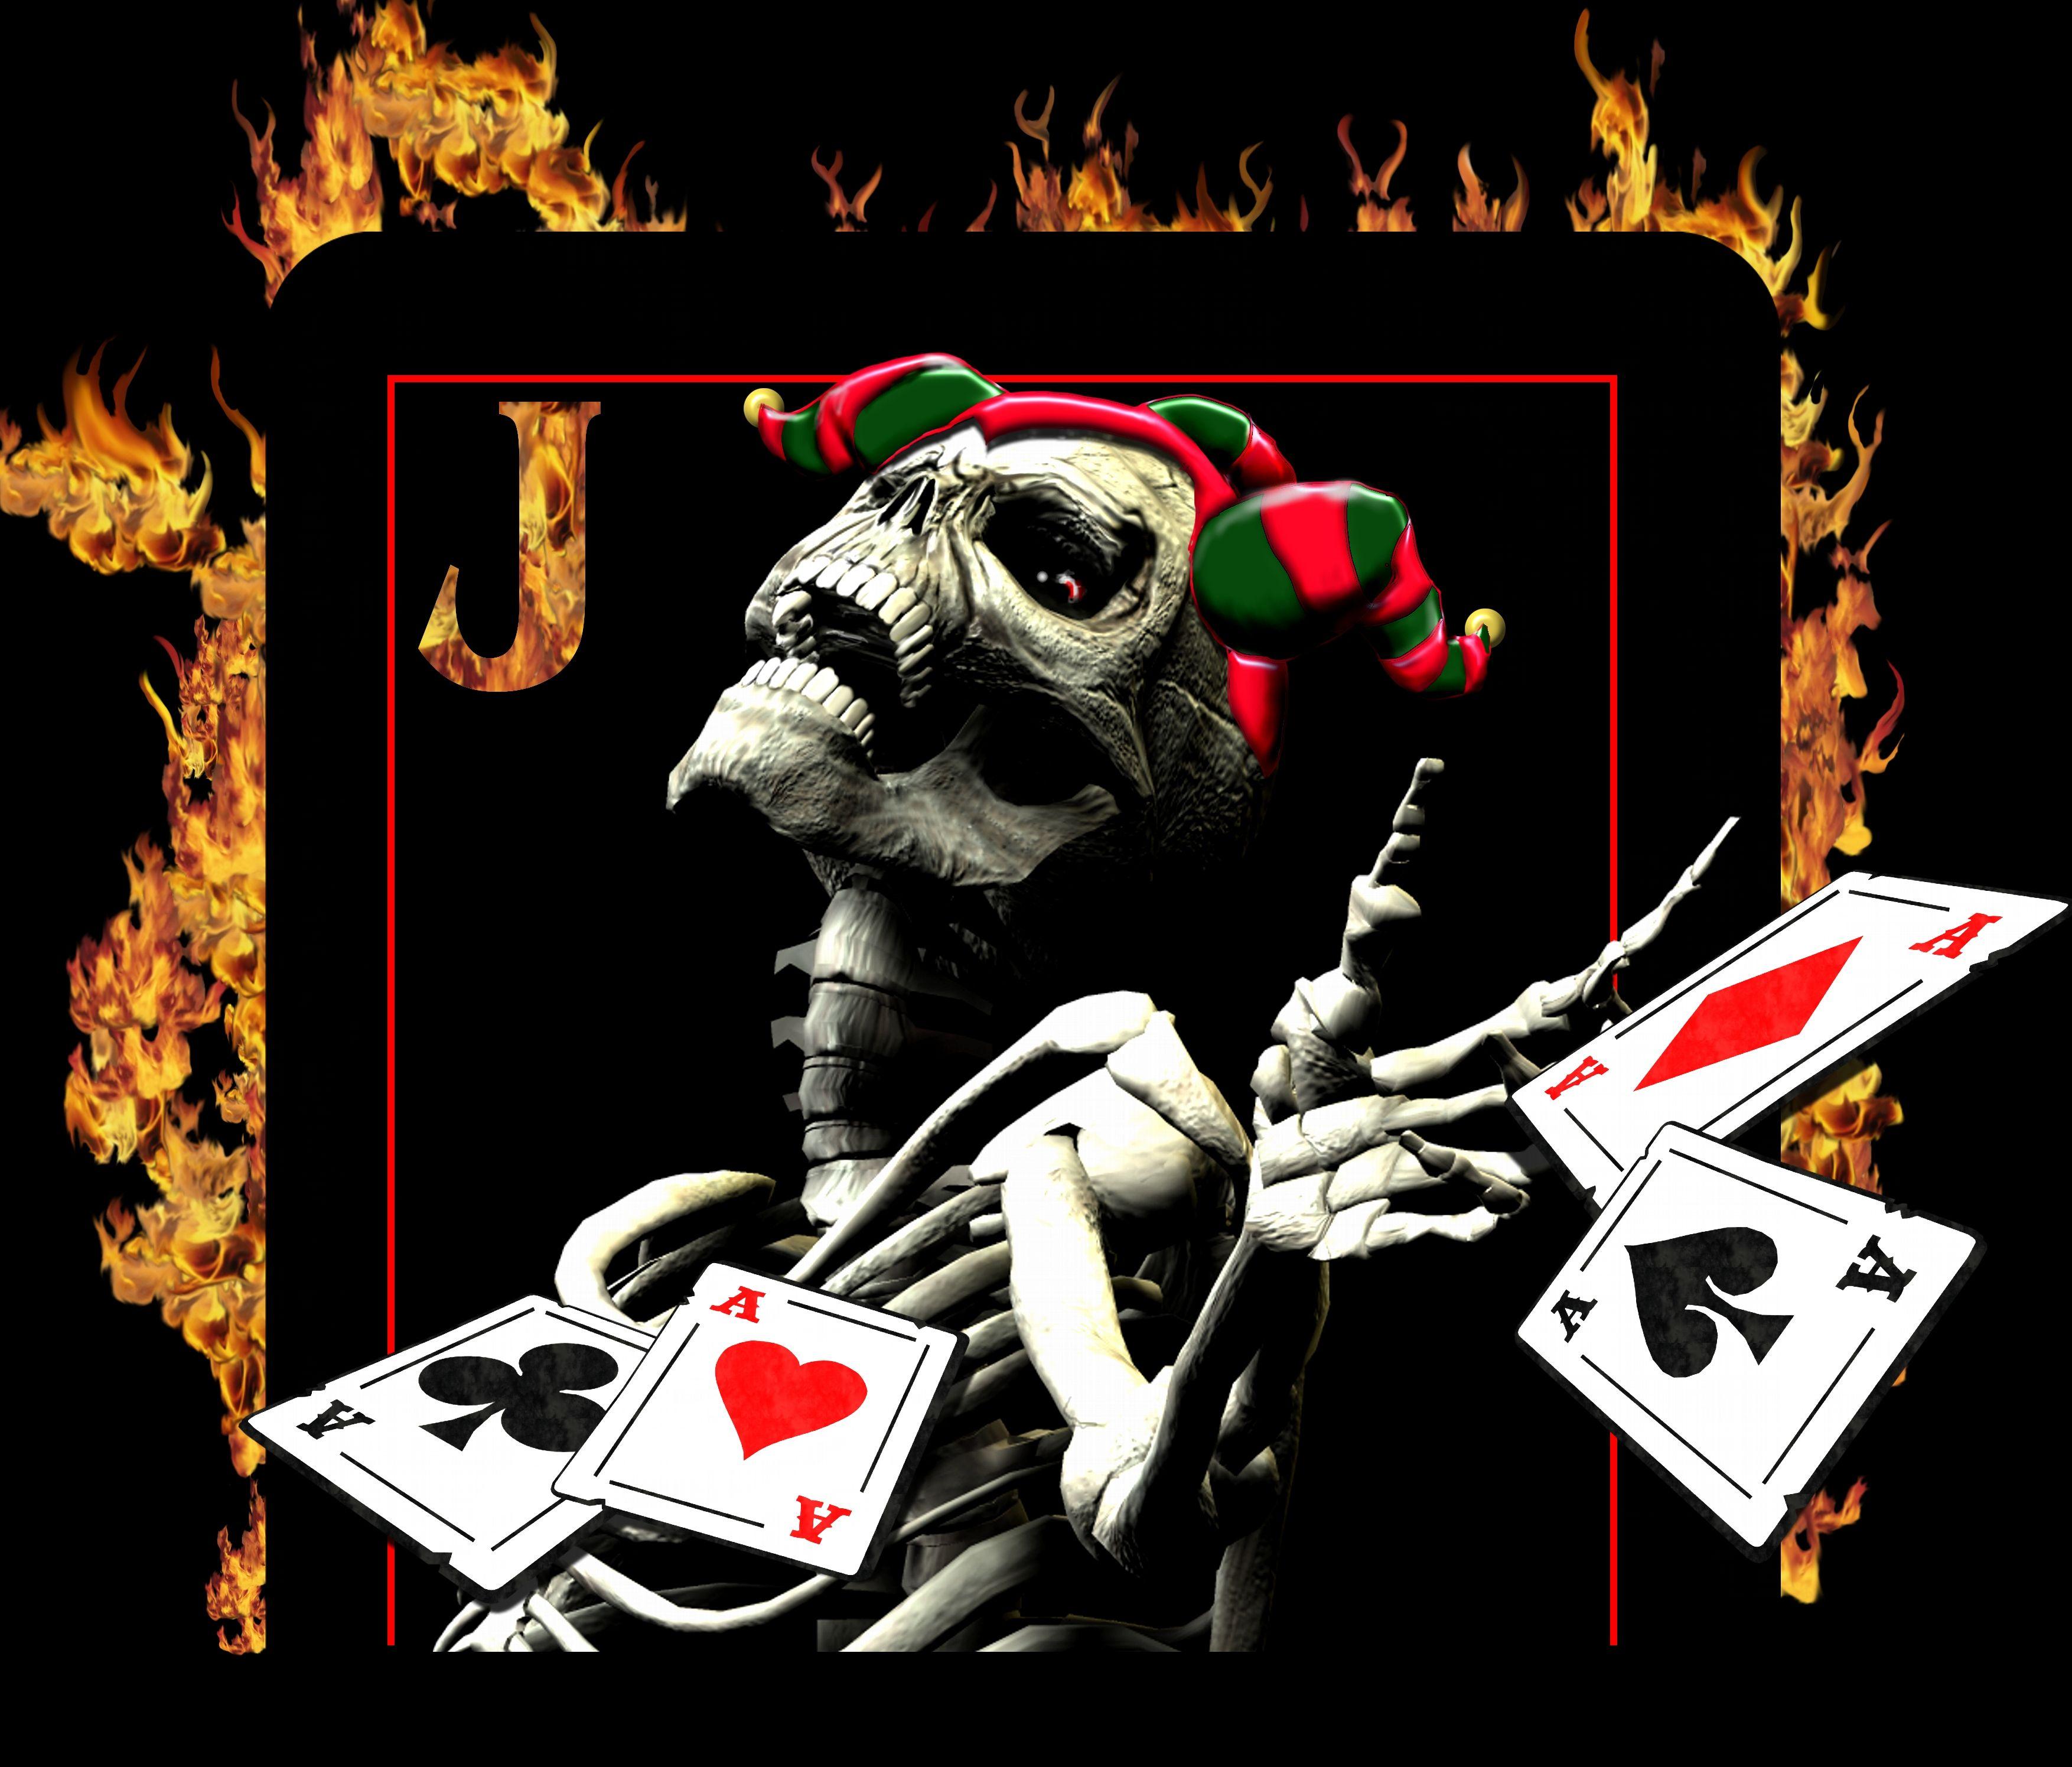 Joker card HD wallpapers free download | Wallpaperbetter